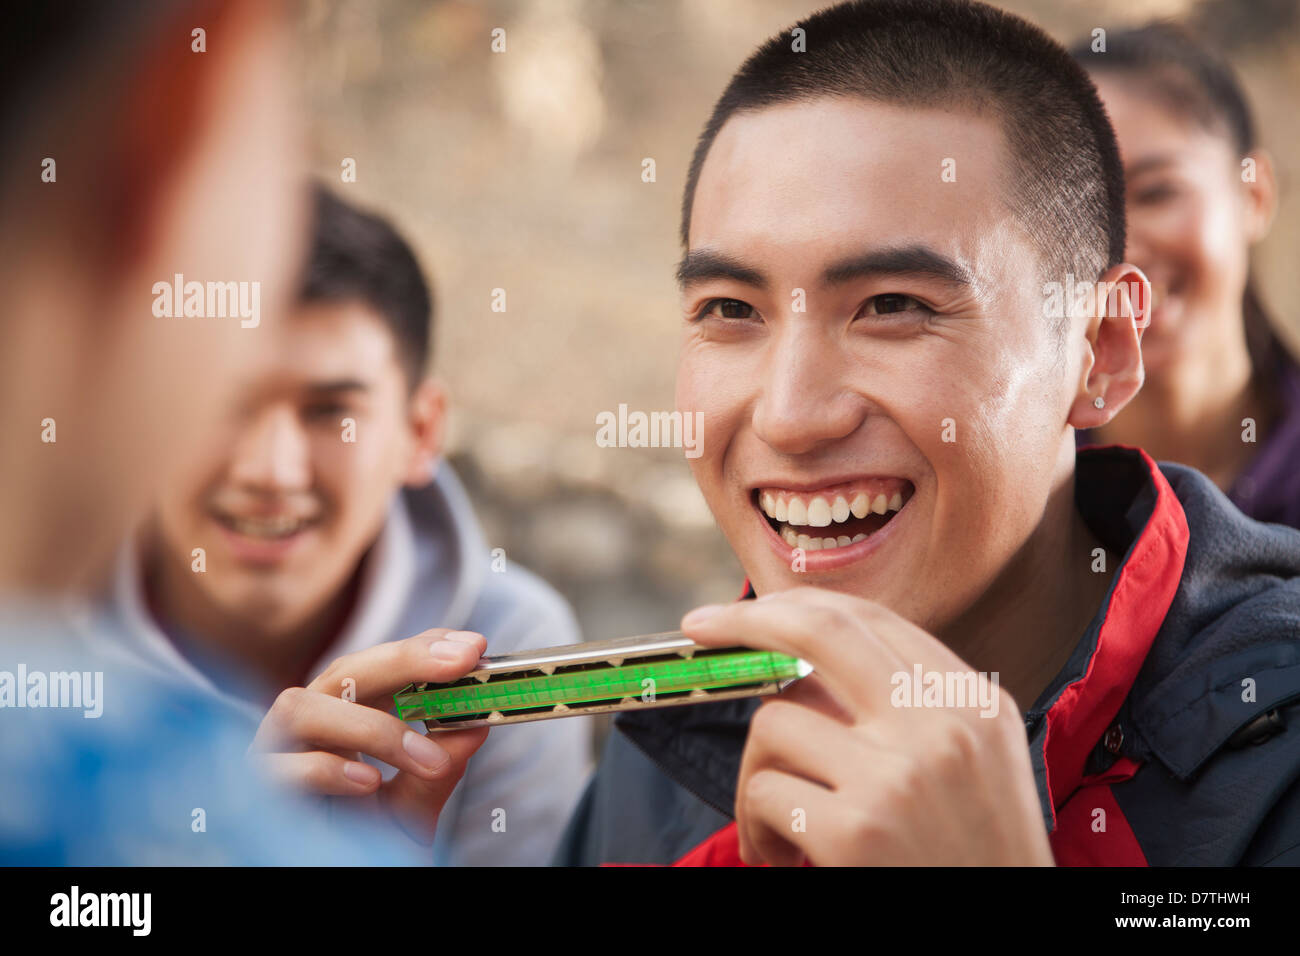 Young man using harmonica, portrait Stock Photo